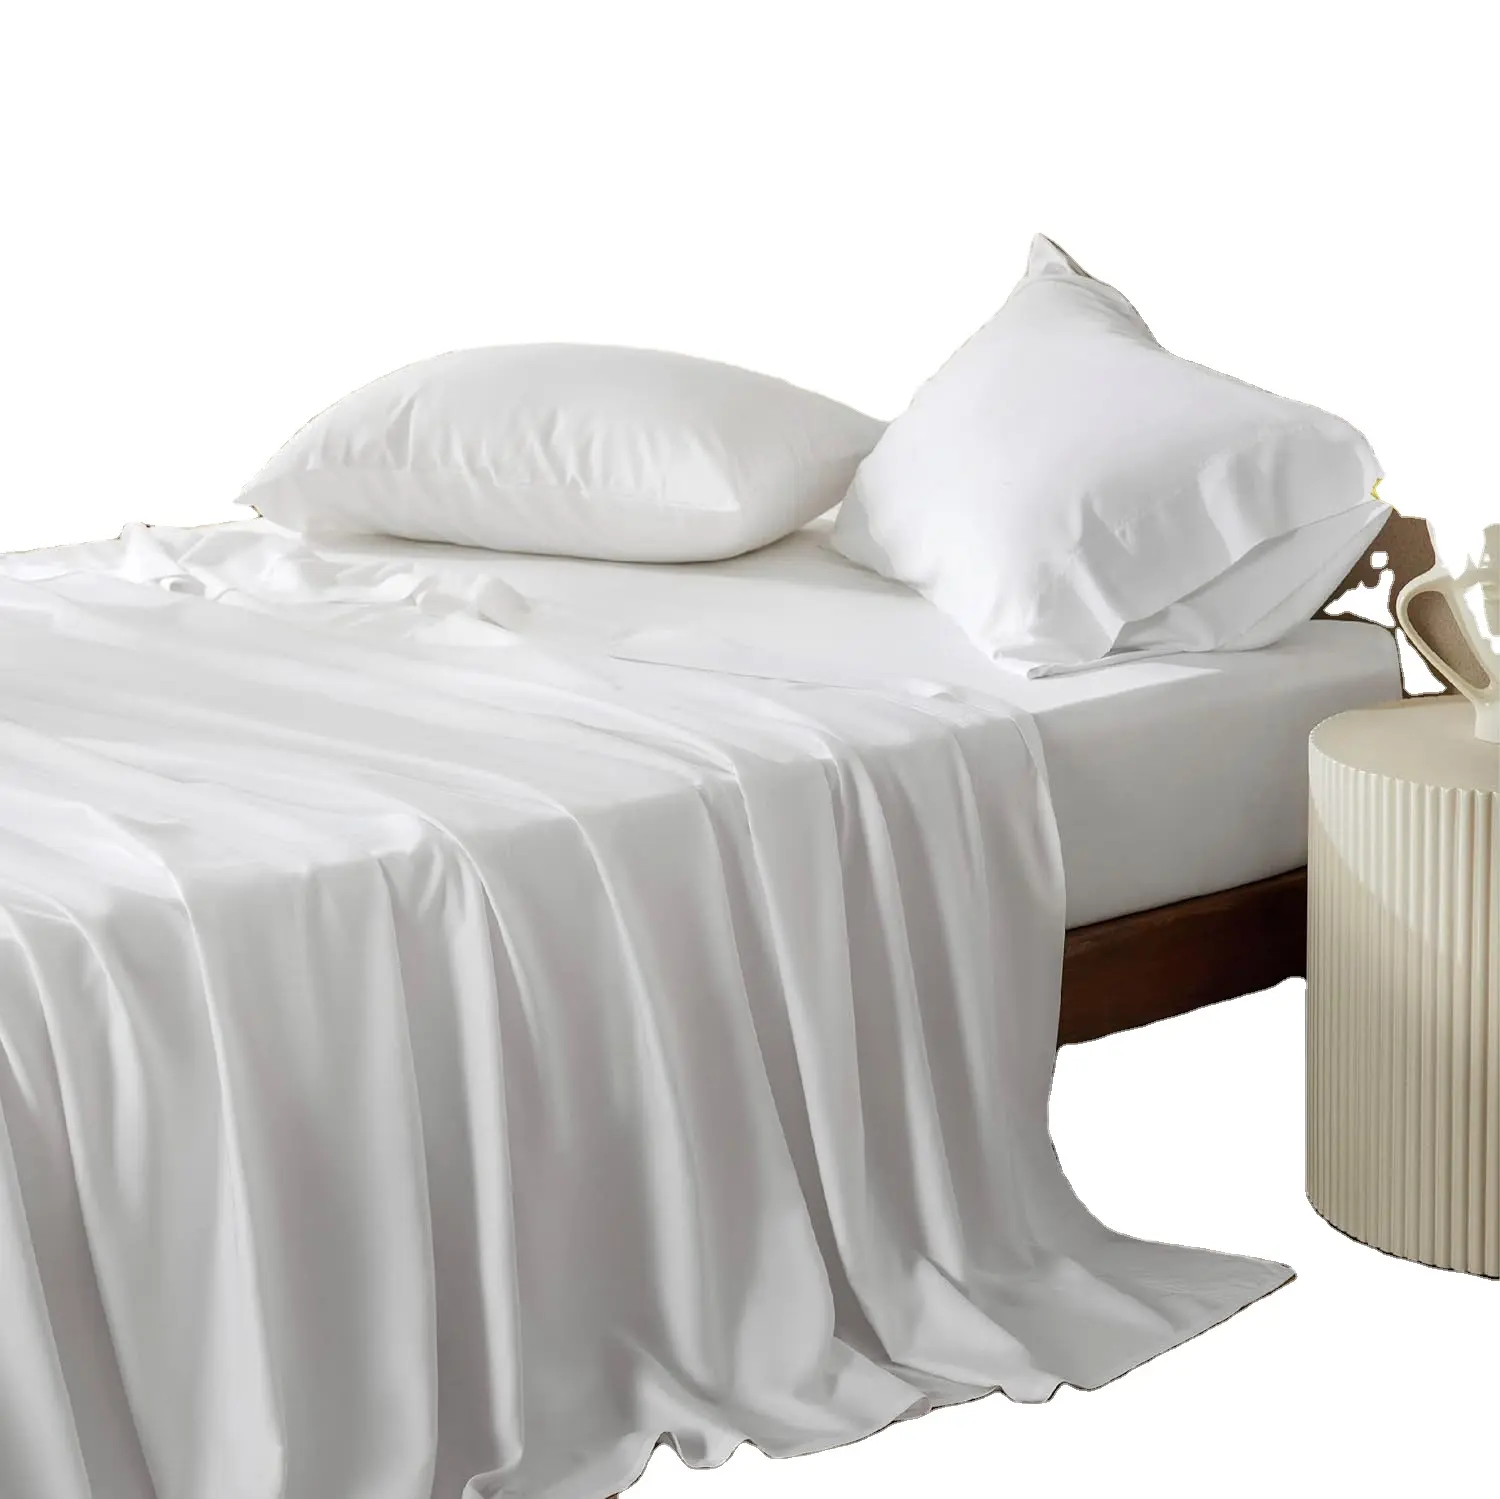 Set seprai tempat tidur hotel Populer penutup selimut putih manufaktur set seprai bambu organik seprai tempat tidur